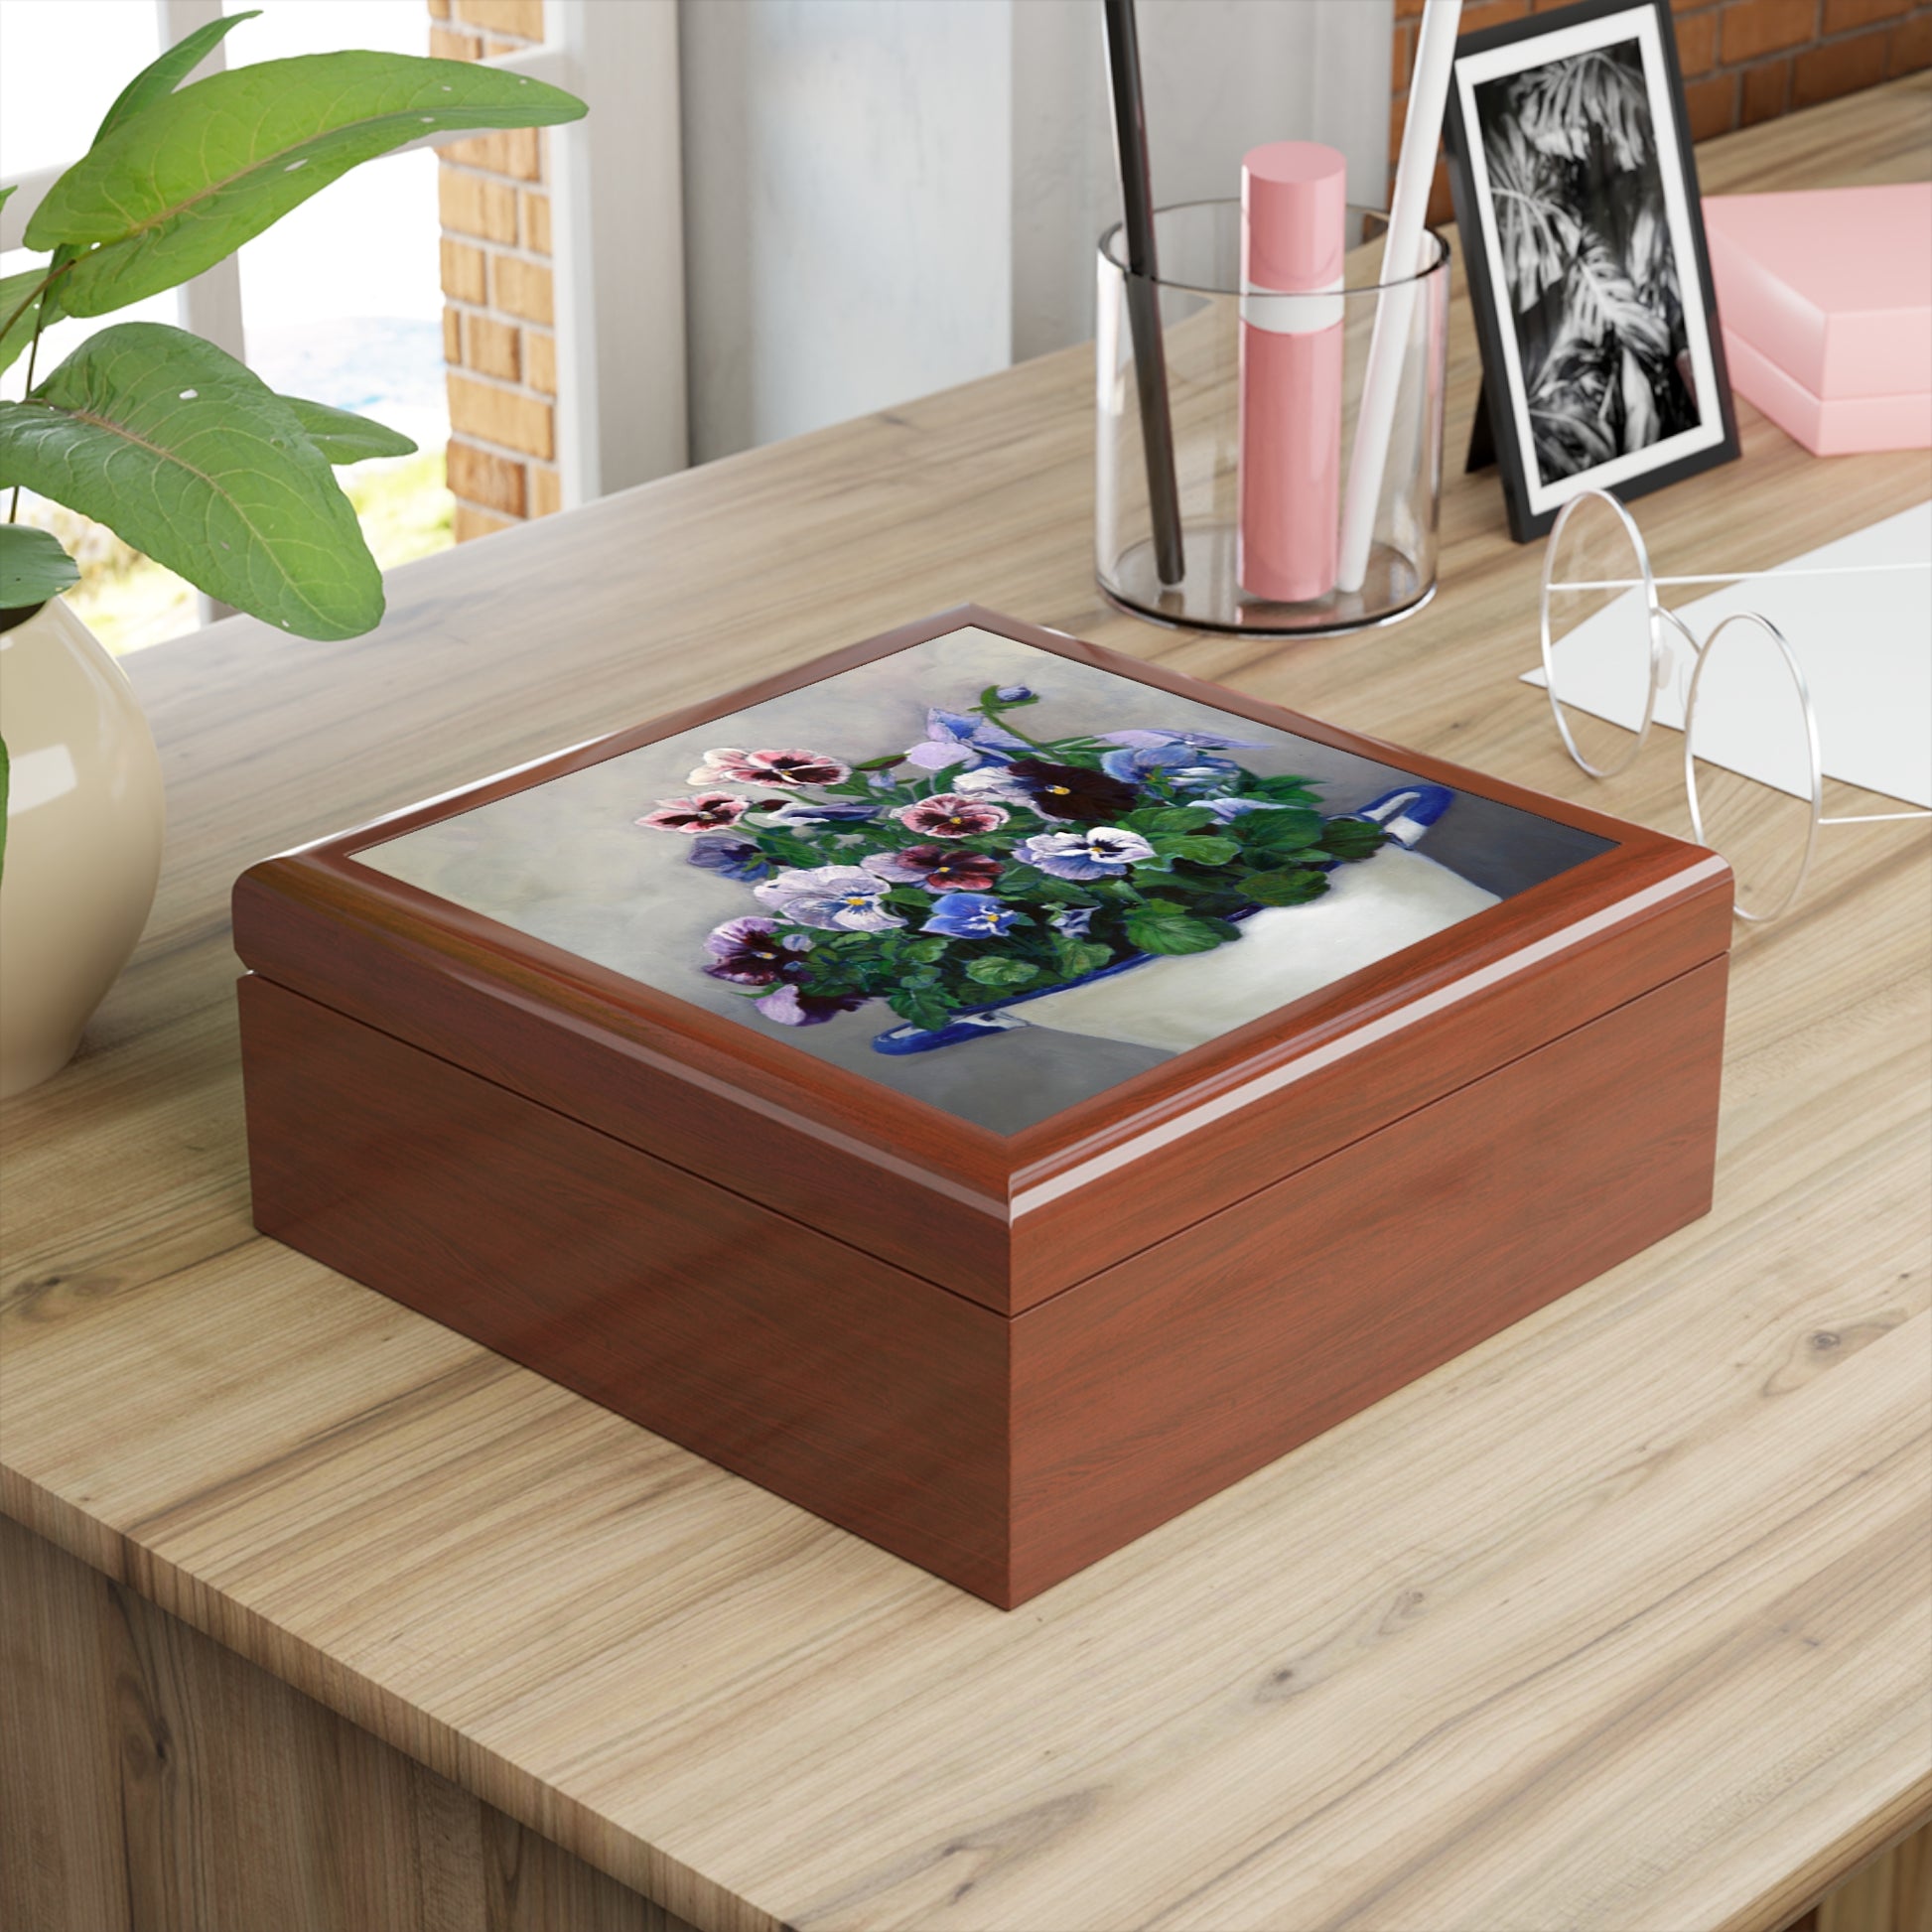 Jewelry/Keepsake Box - Pansies - Lacquered Wood Box  golden oak